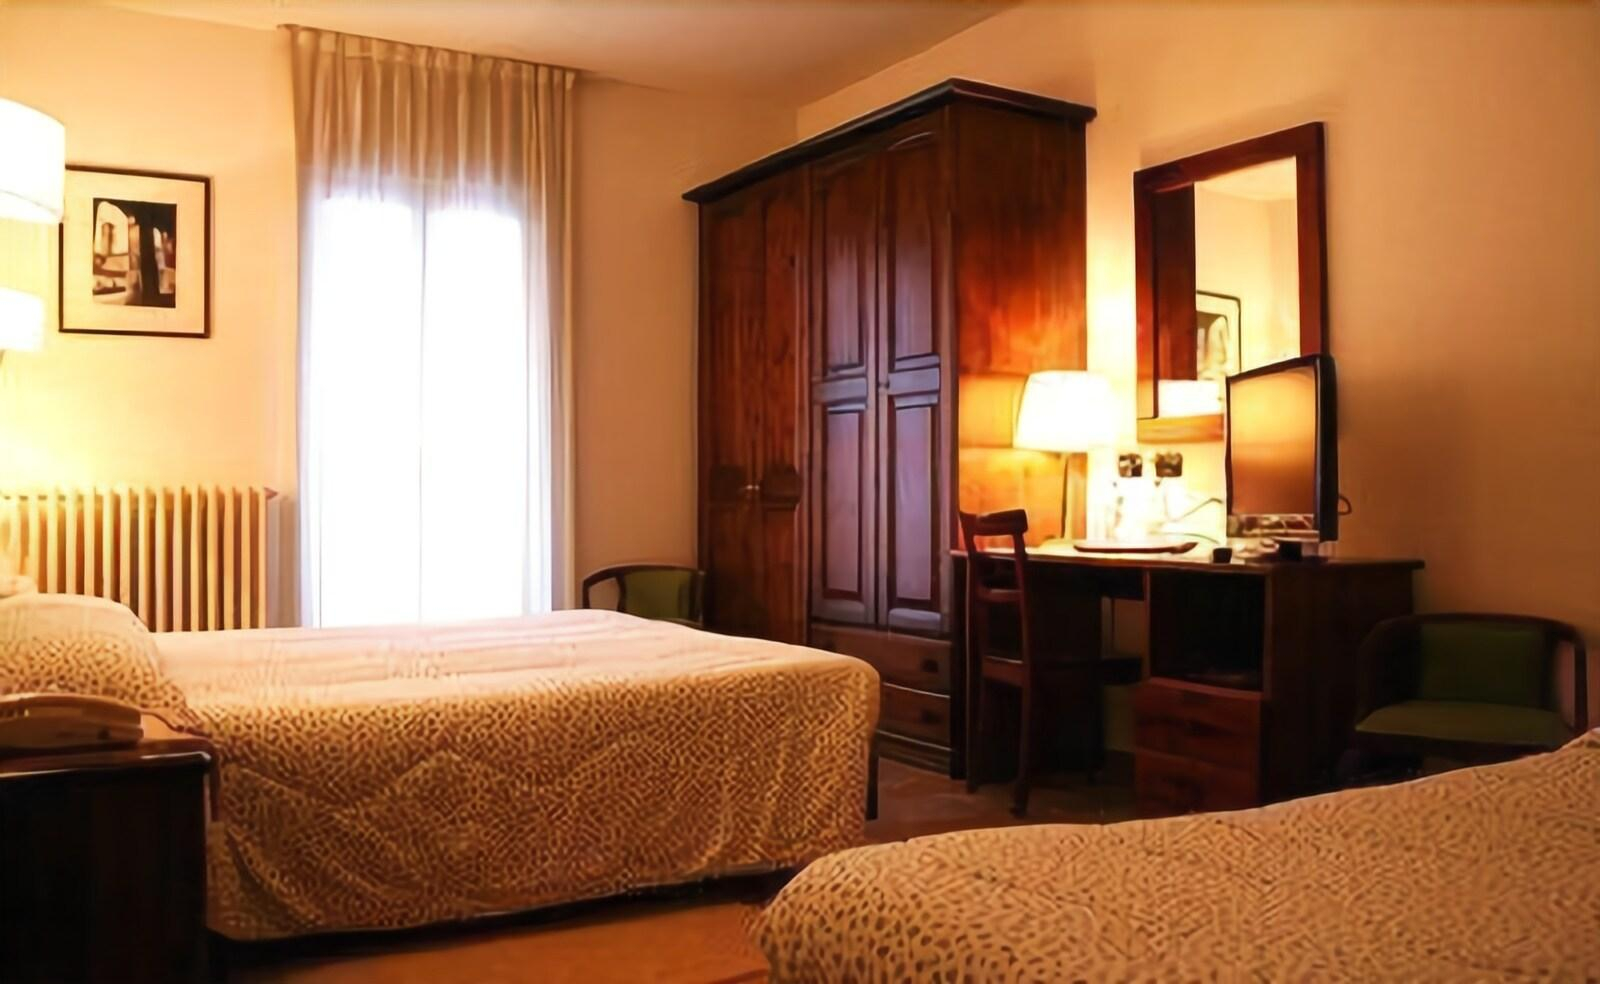 Bedroom 4, Hotel Aurora, Bergamo